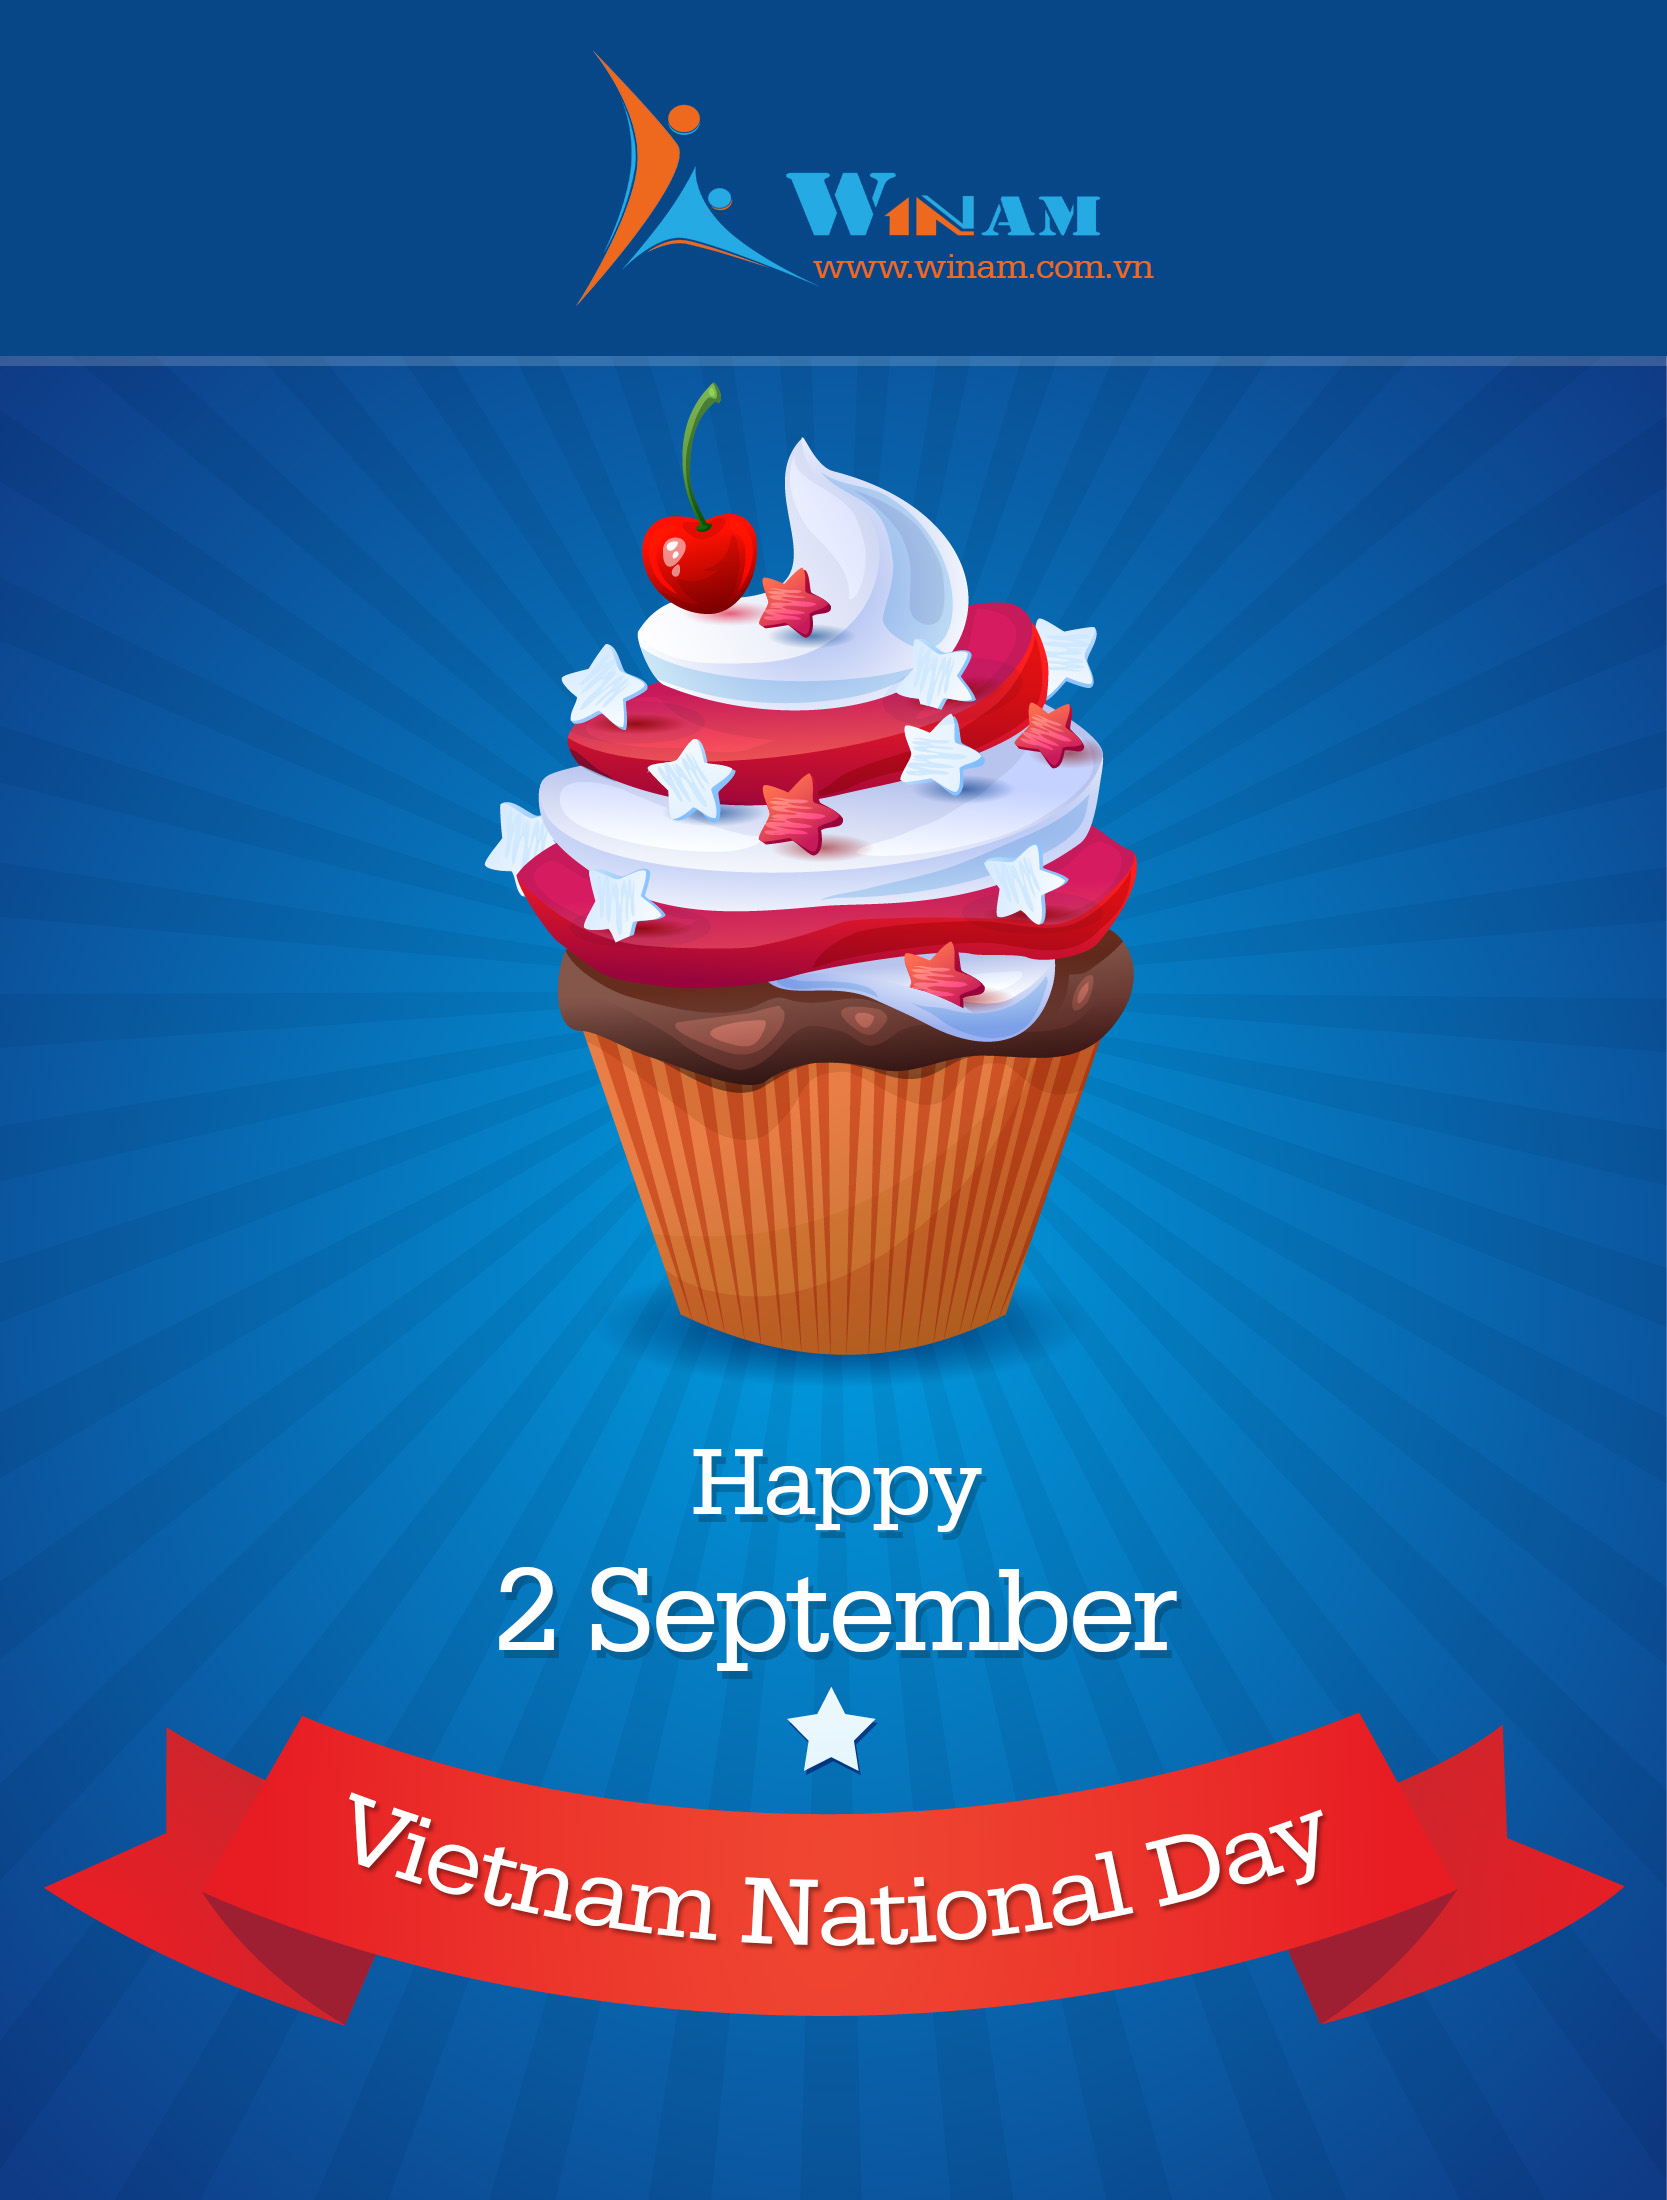 National Day Vietnam